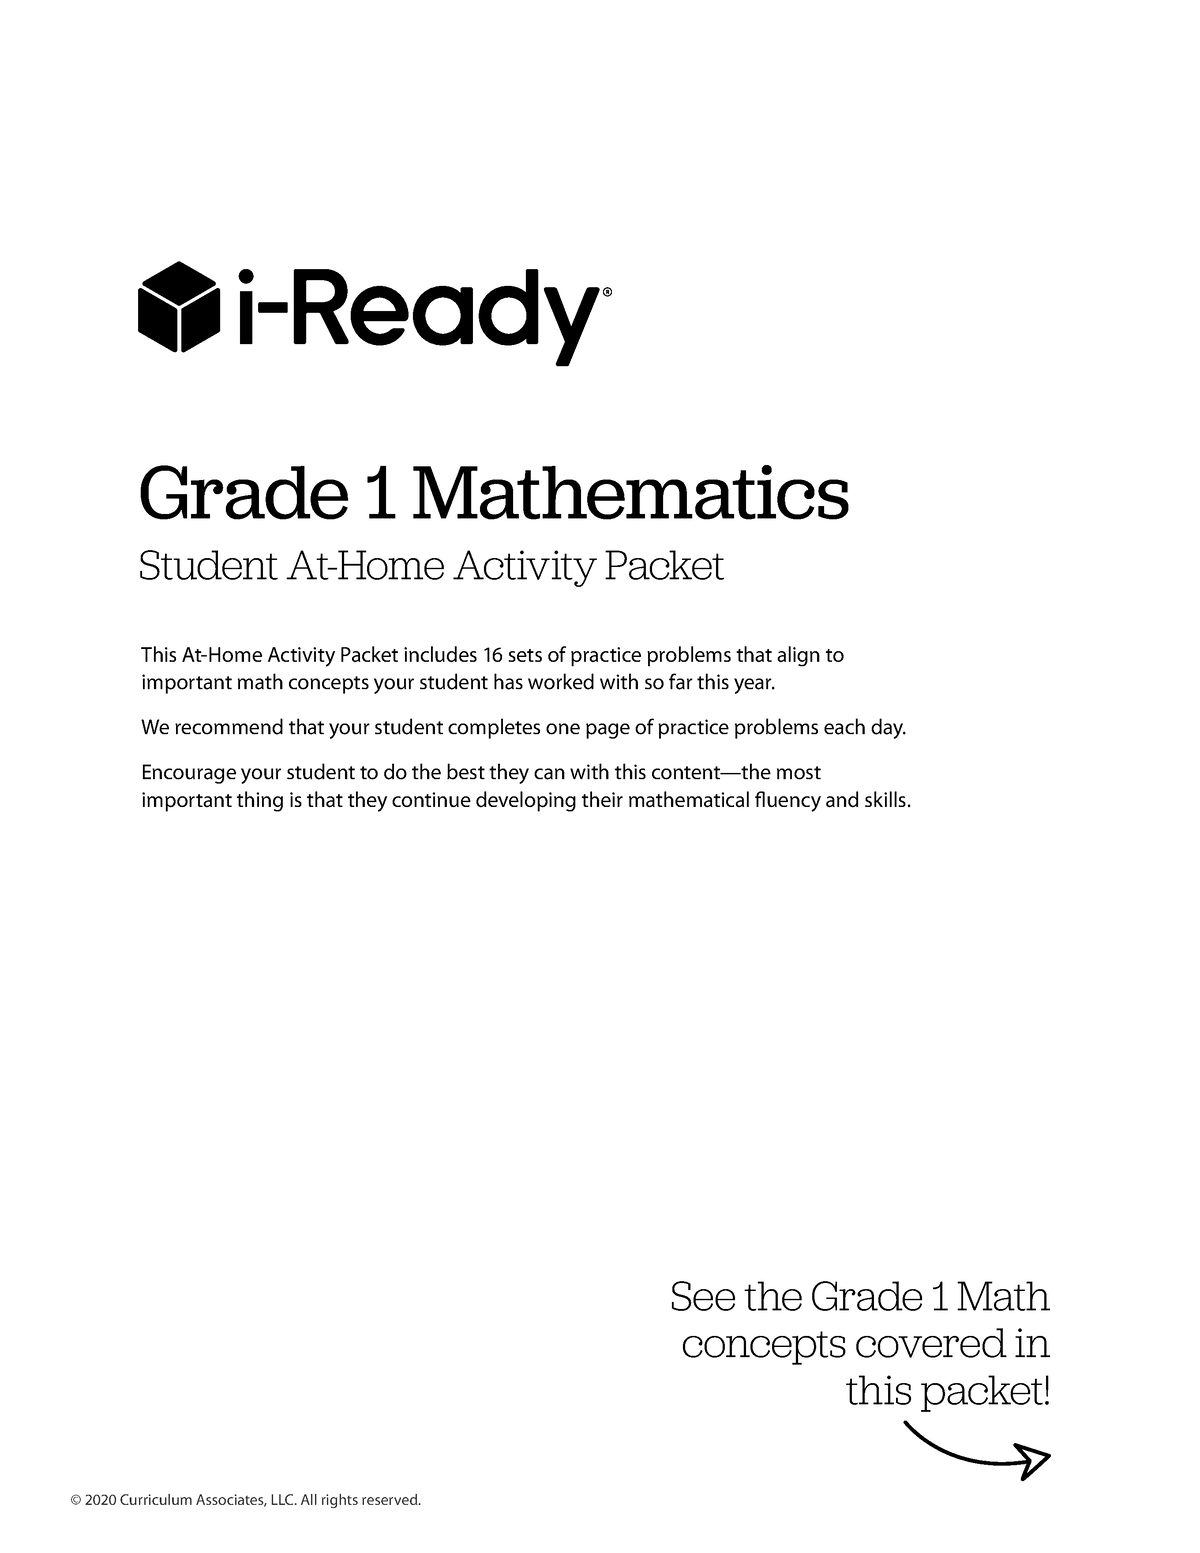 iready-at-home-activity-packets-student-math-grade-1-2020-grade-1